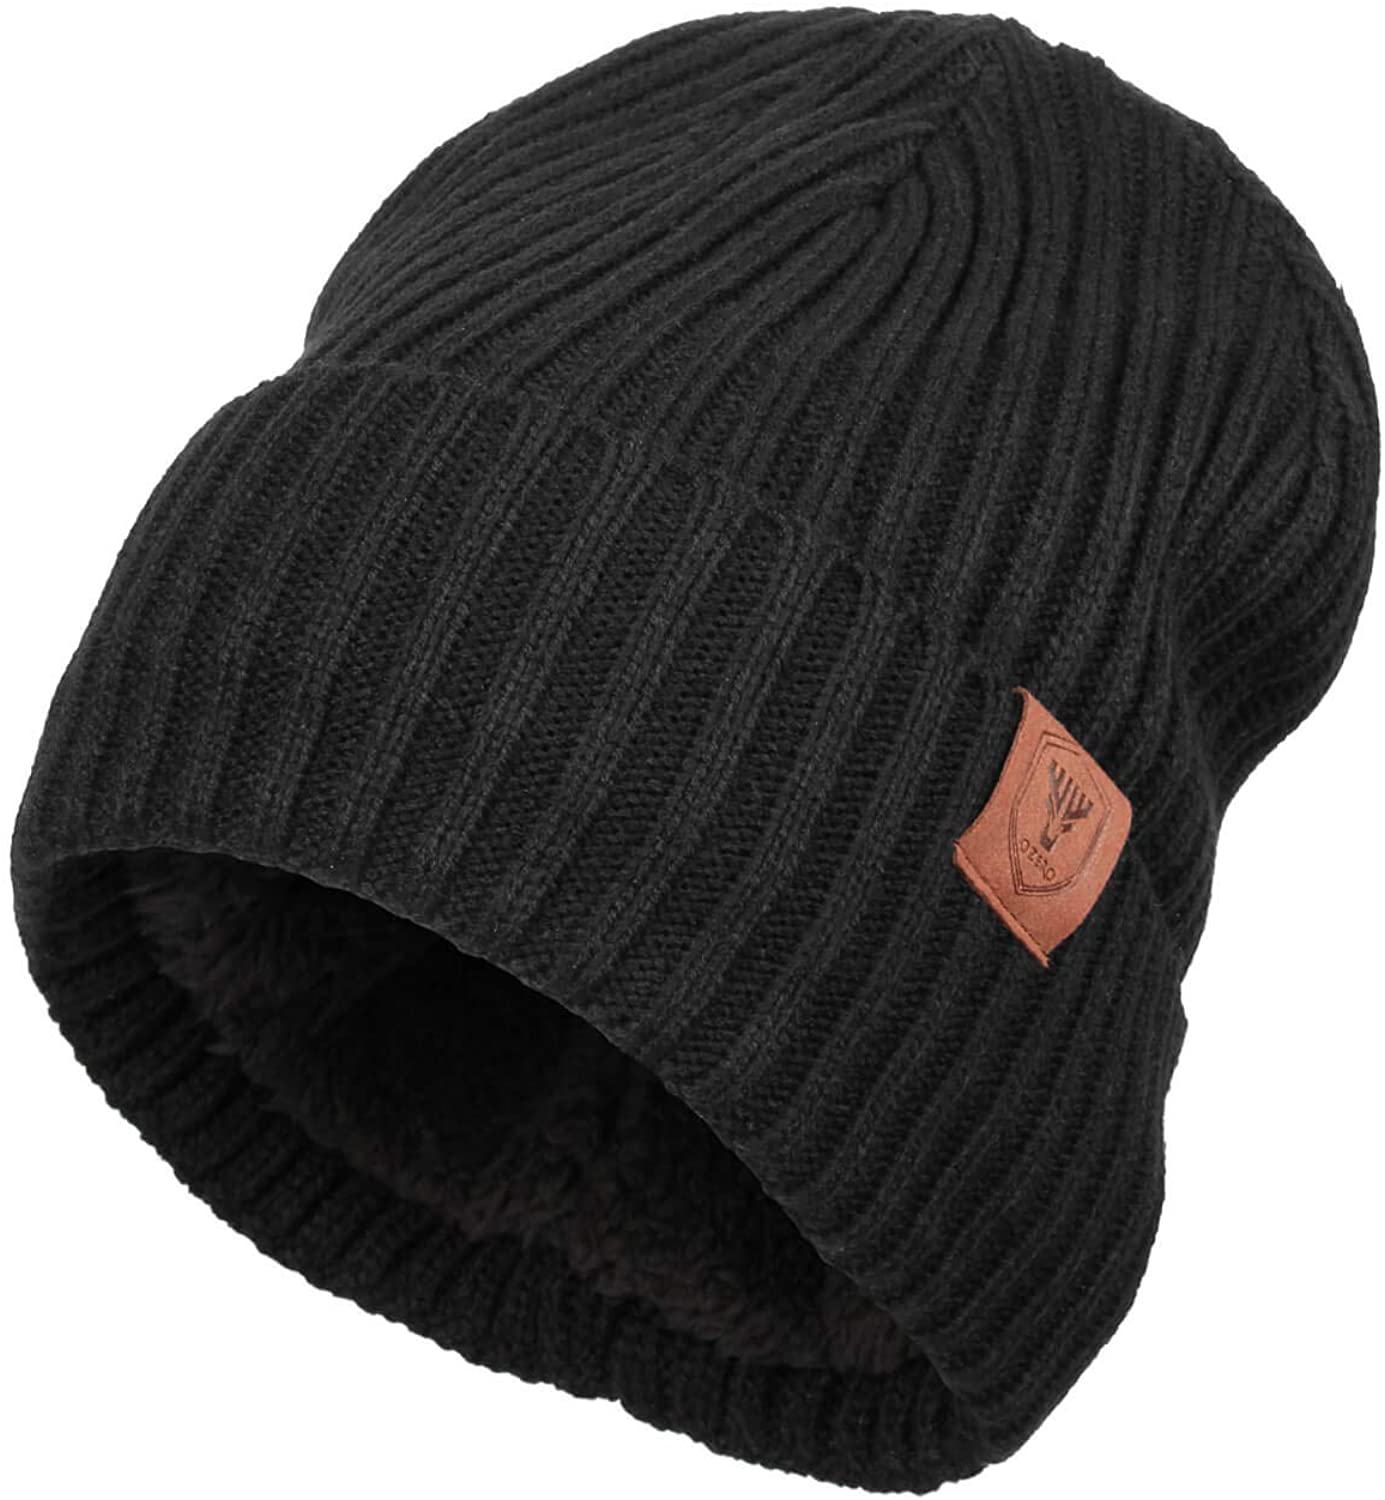 OZERO Knit Beanie Winter Hat, Thermal Thick Polar Fleece Snow Skull Cap for  Men